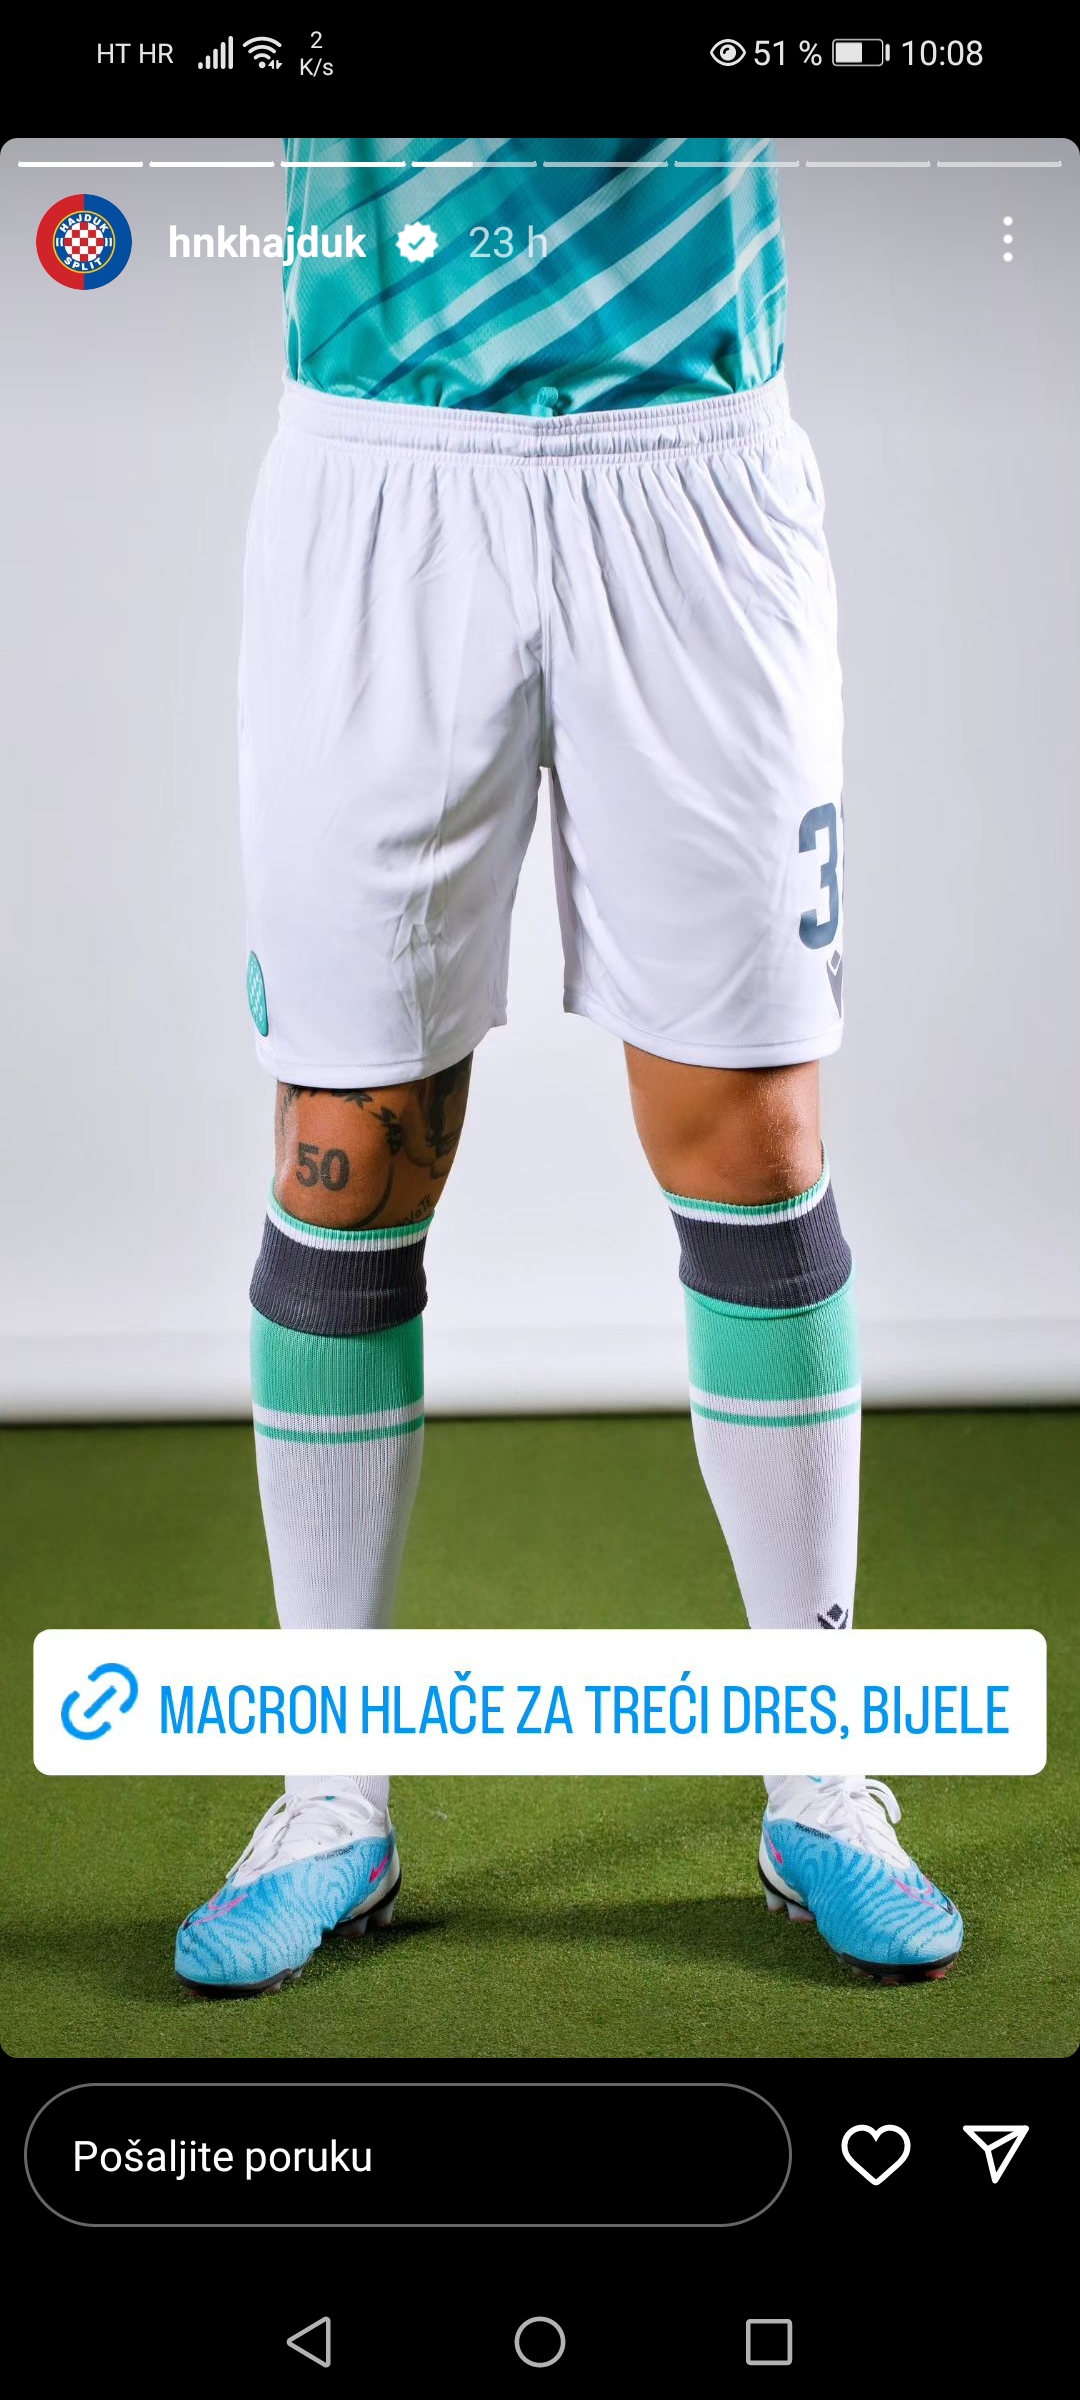 Macron 2021-22 Hajduk Split Away Kit Released » The Kitman